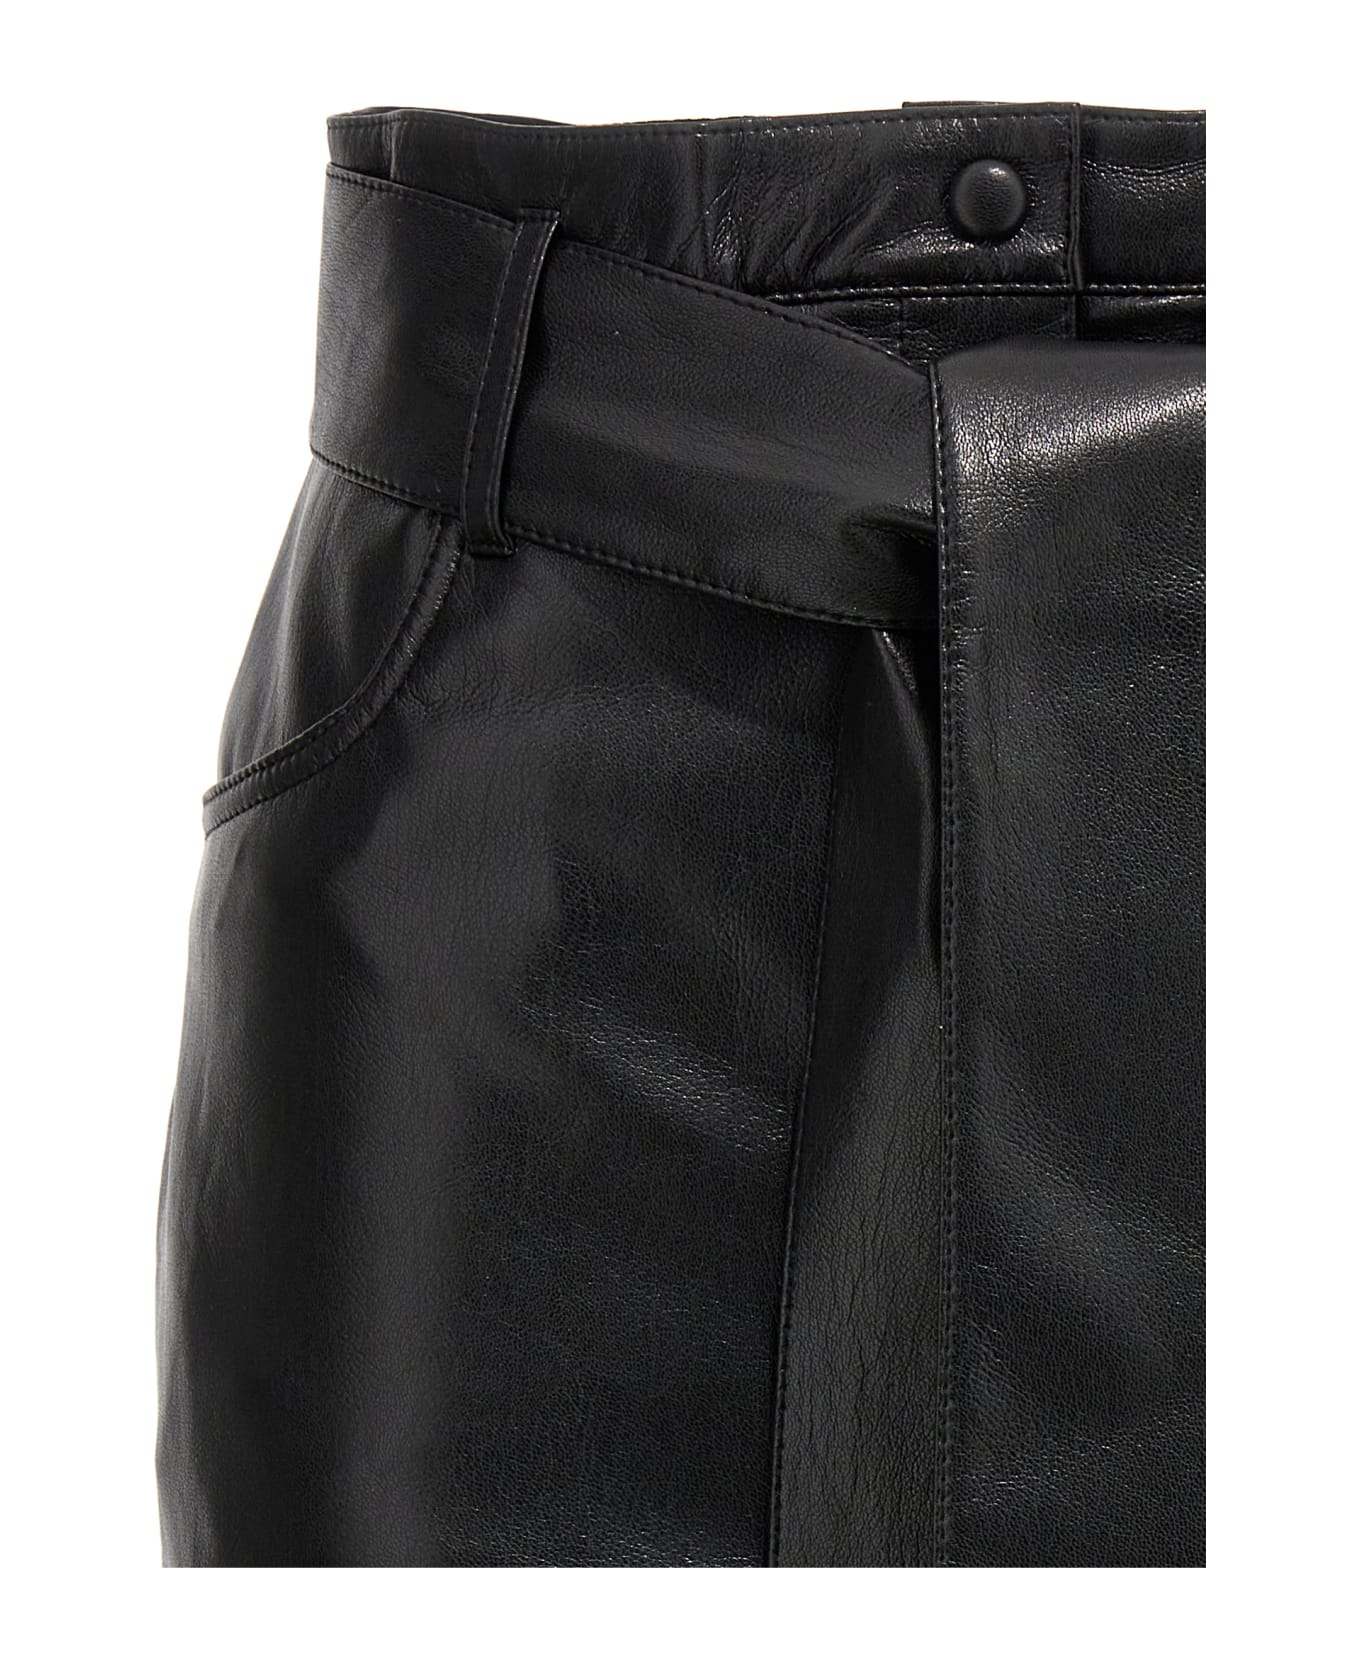 Nanushka 'meda' Miniskirt - Black  